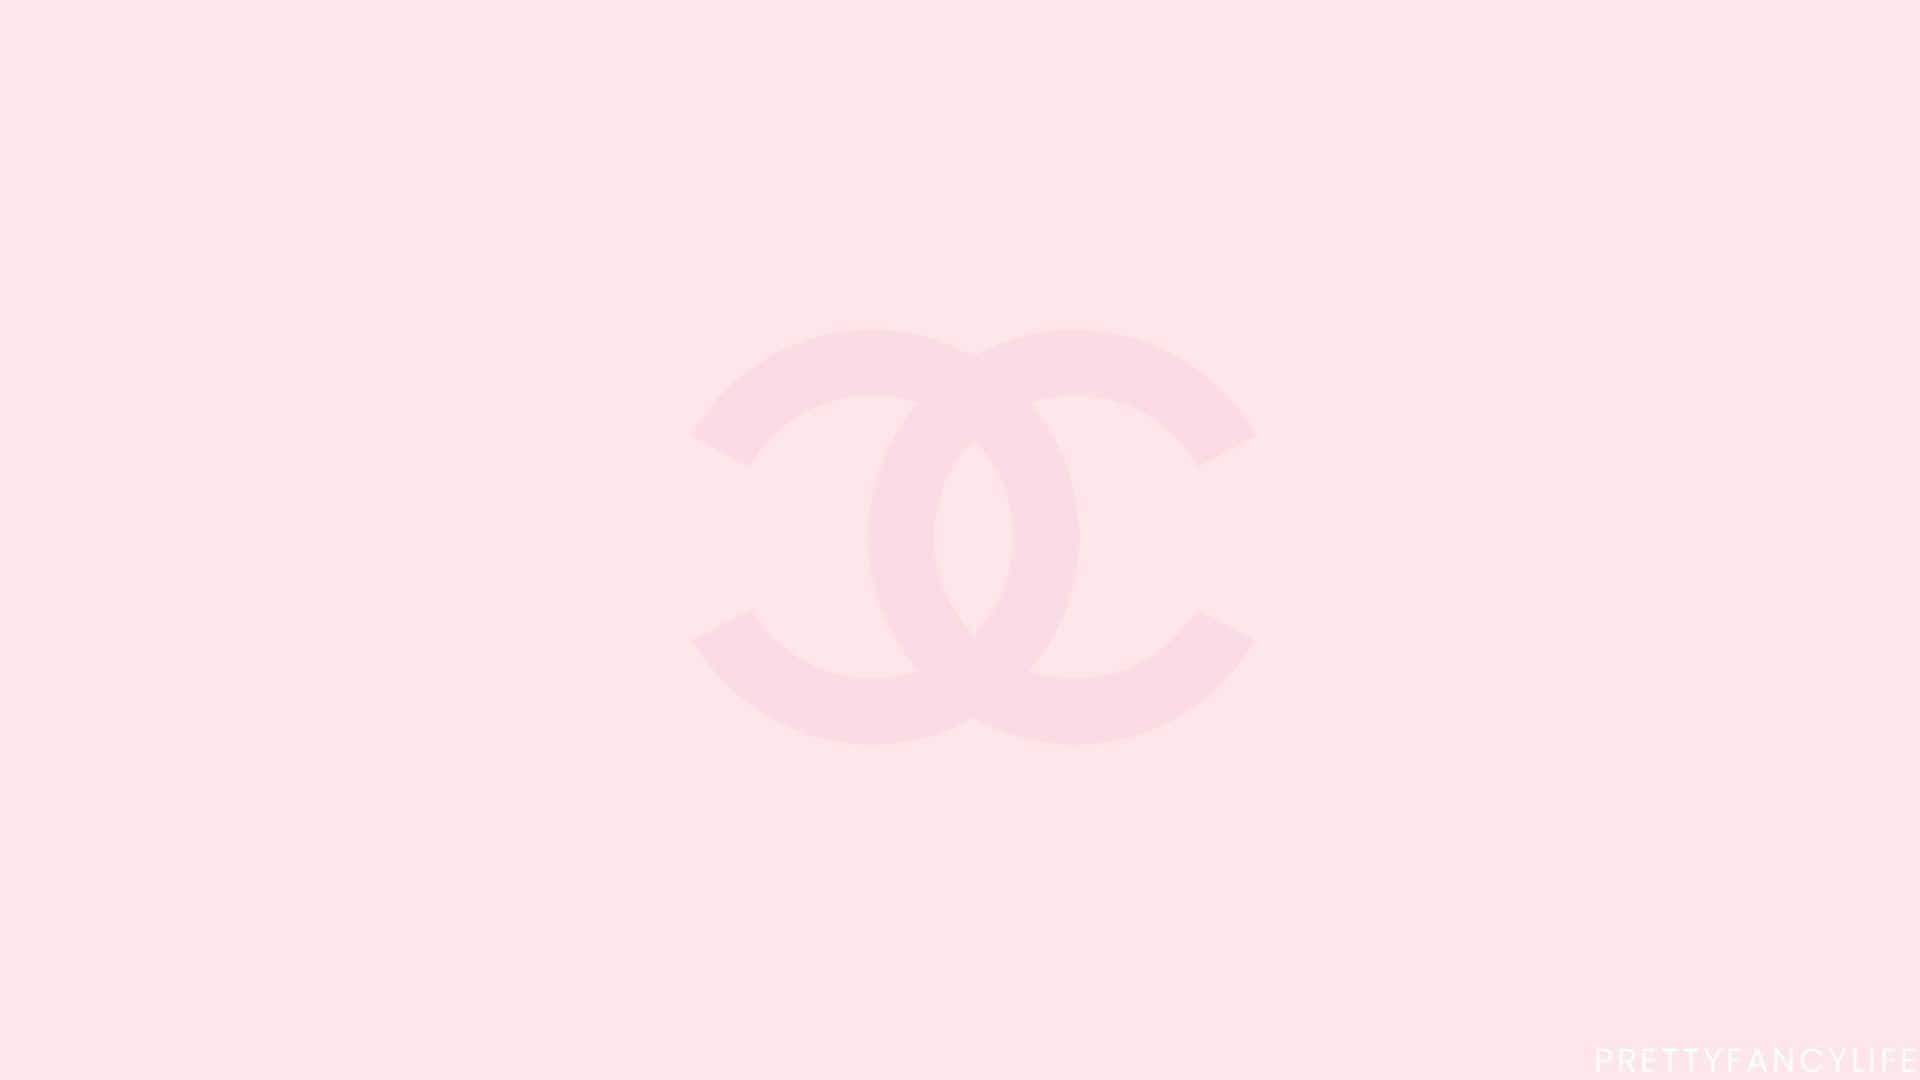 Chanel Black Logo In Pink Pastel Marble Background Bathroom